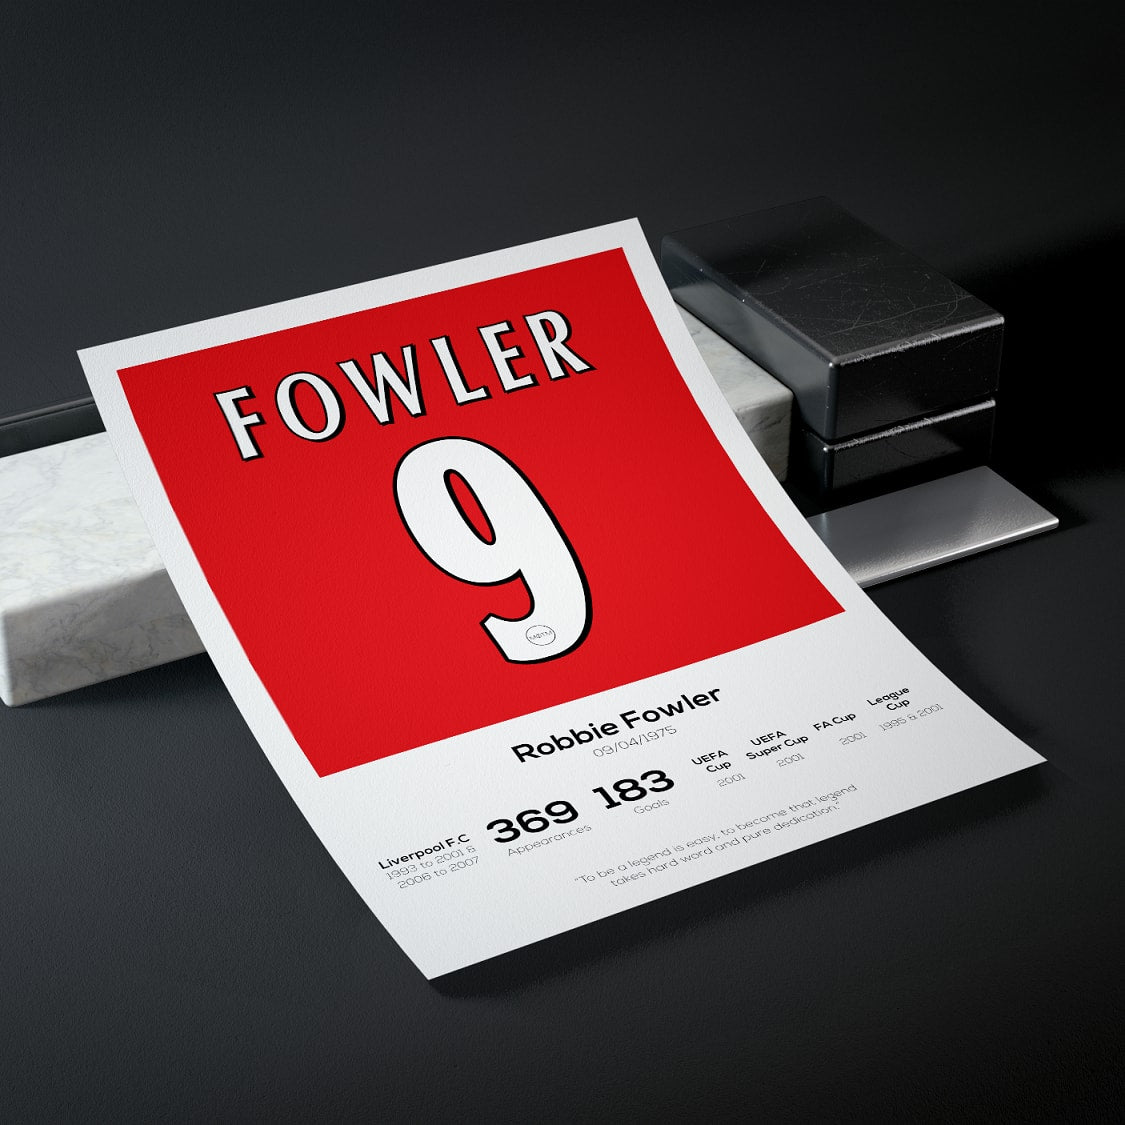 Robbie Fowler Liverpool Legend Stats Print - Man of The Match Football